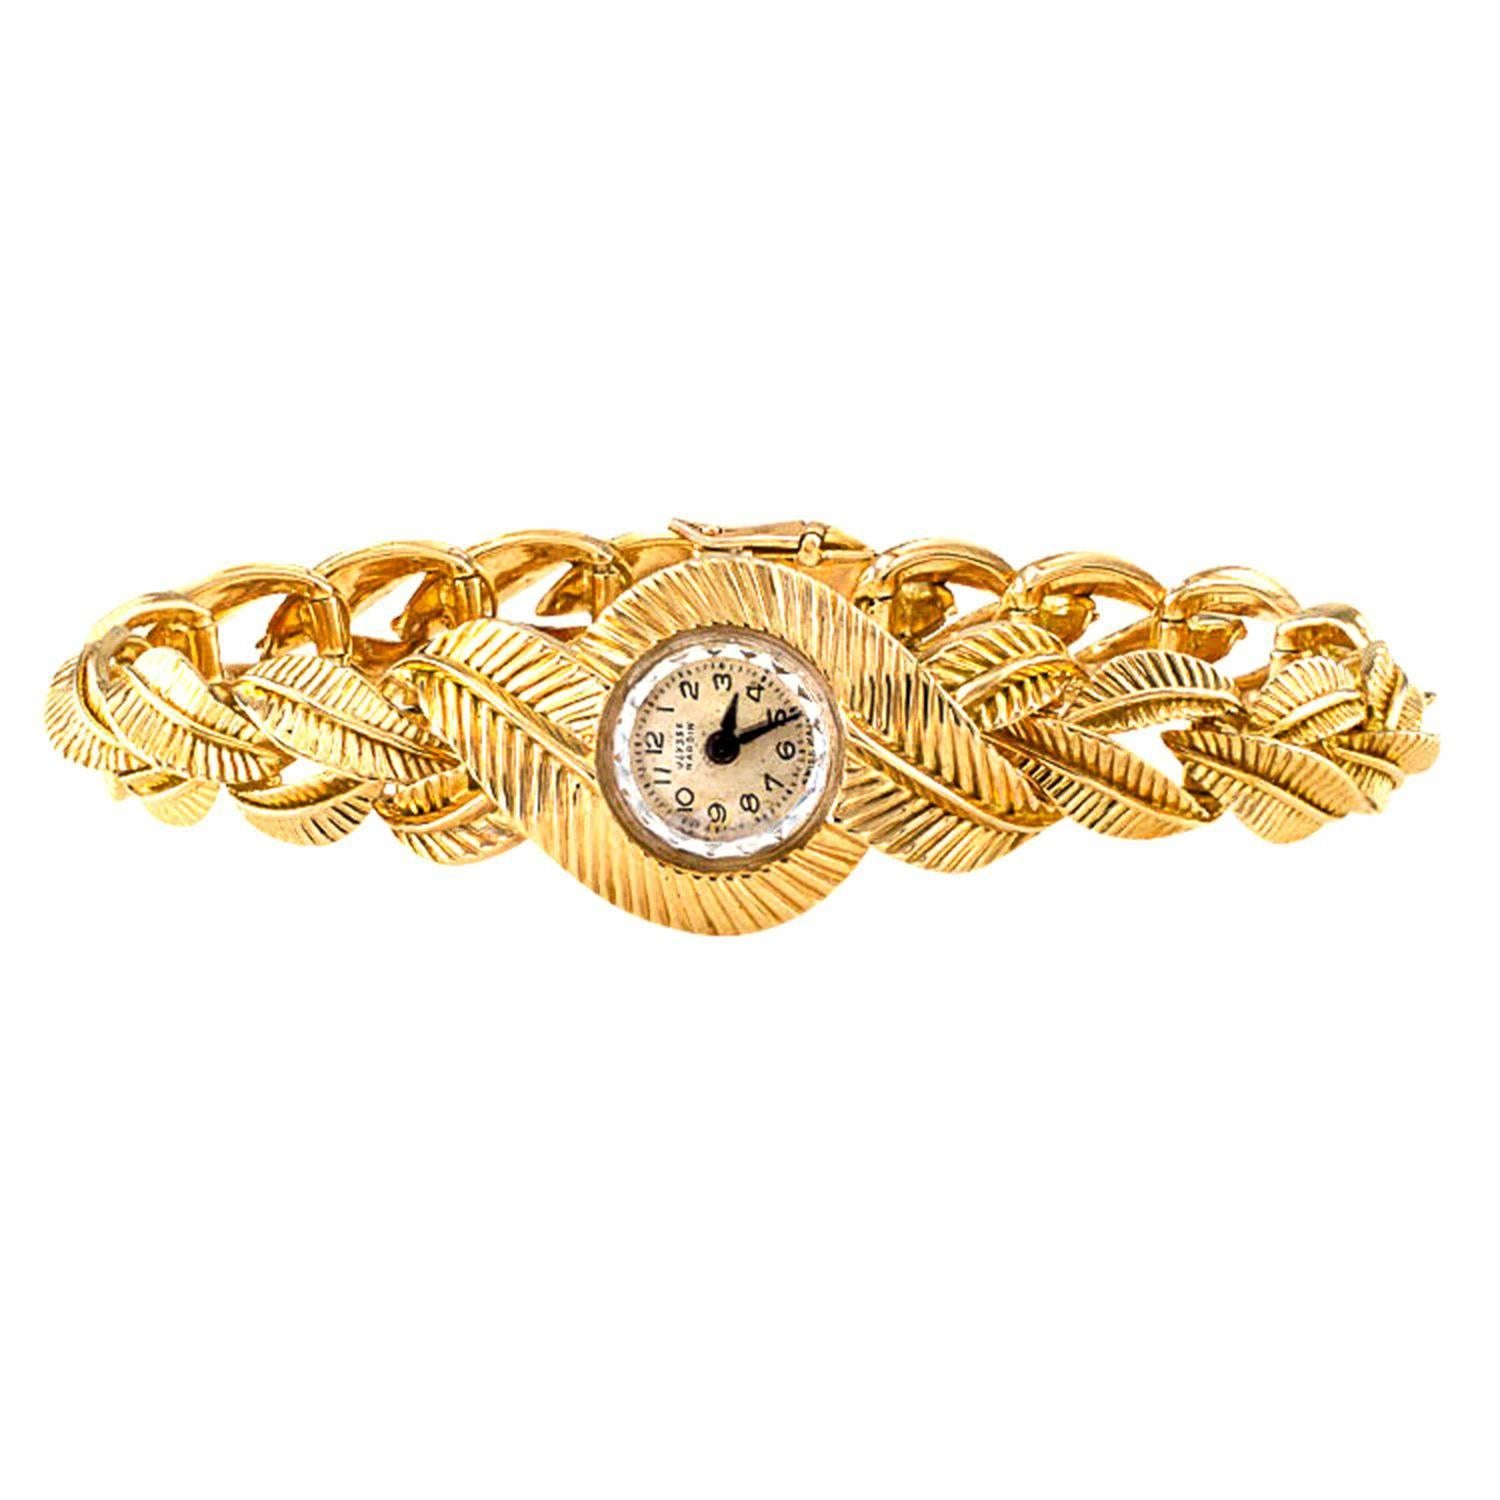 Modern Van Cleef & Arpels Ulysse Nardin Ladies Yellow Gold Bracelet Wristwatch